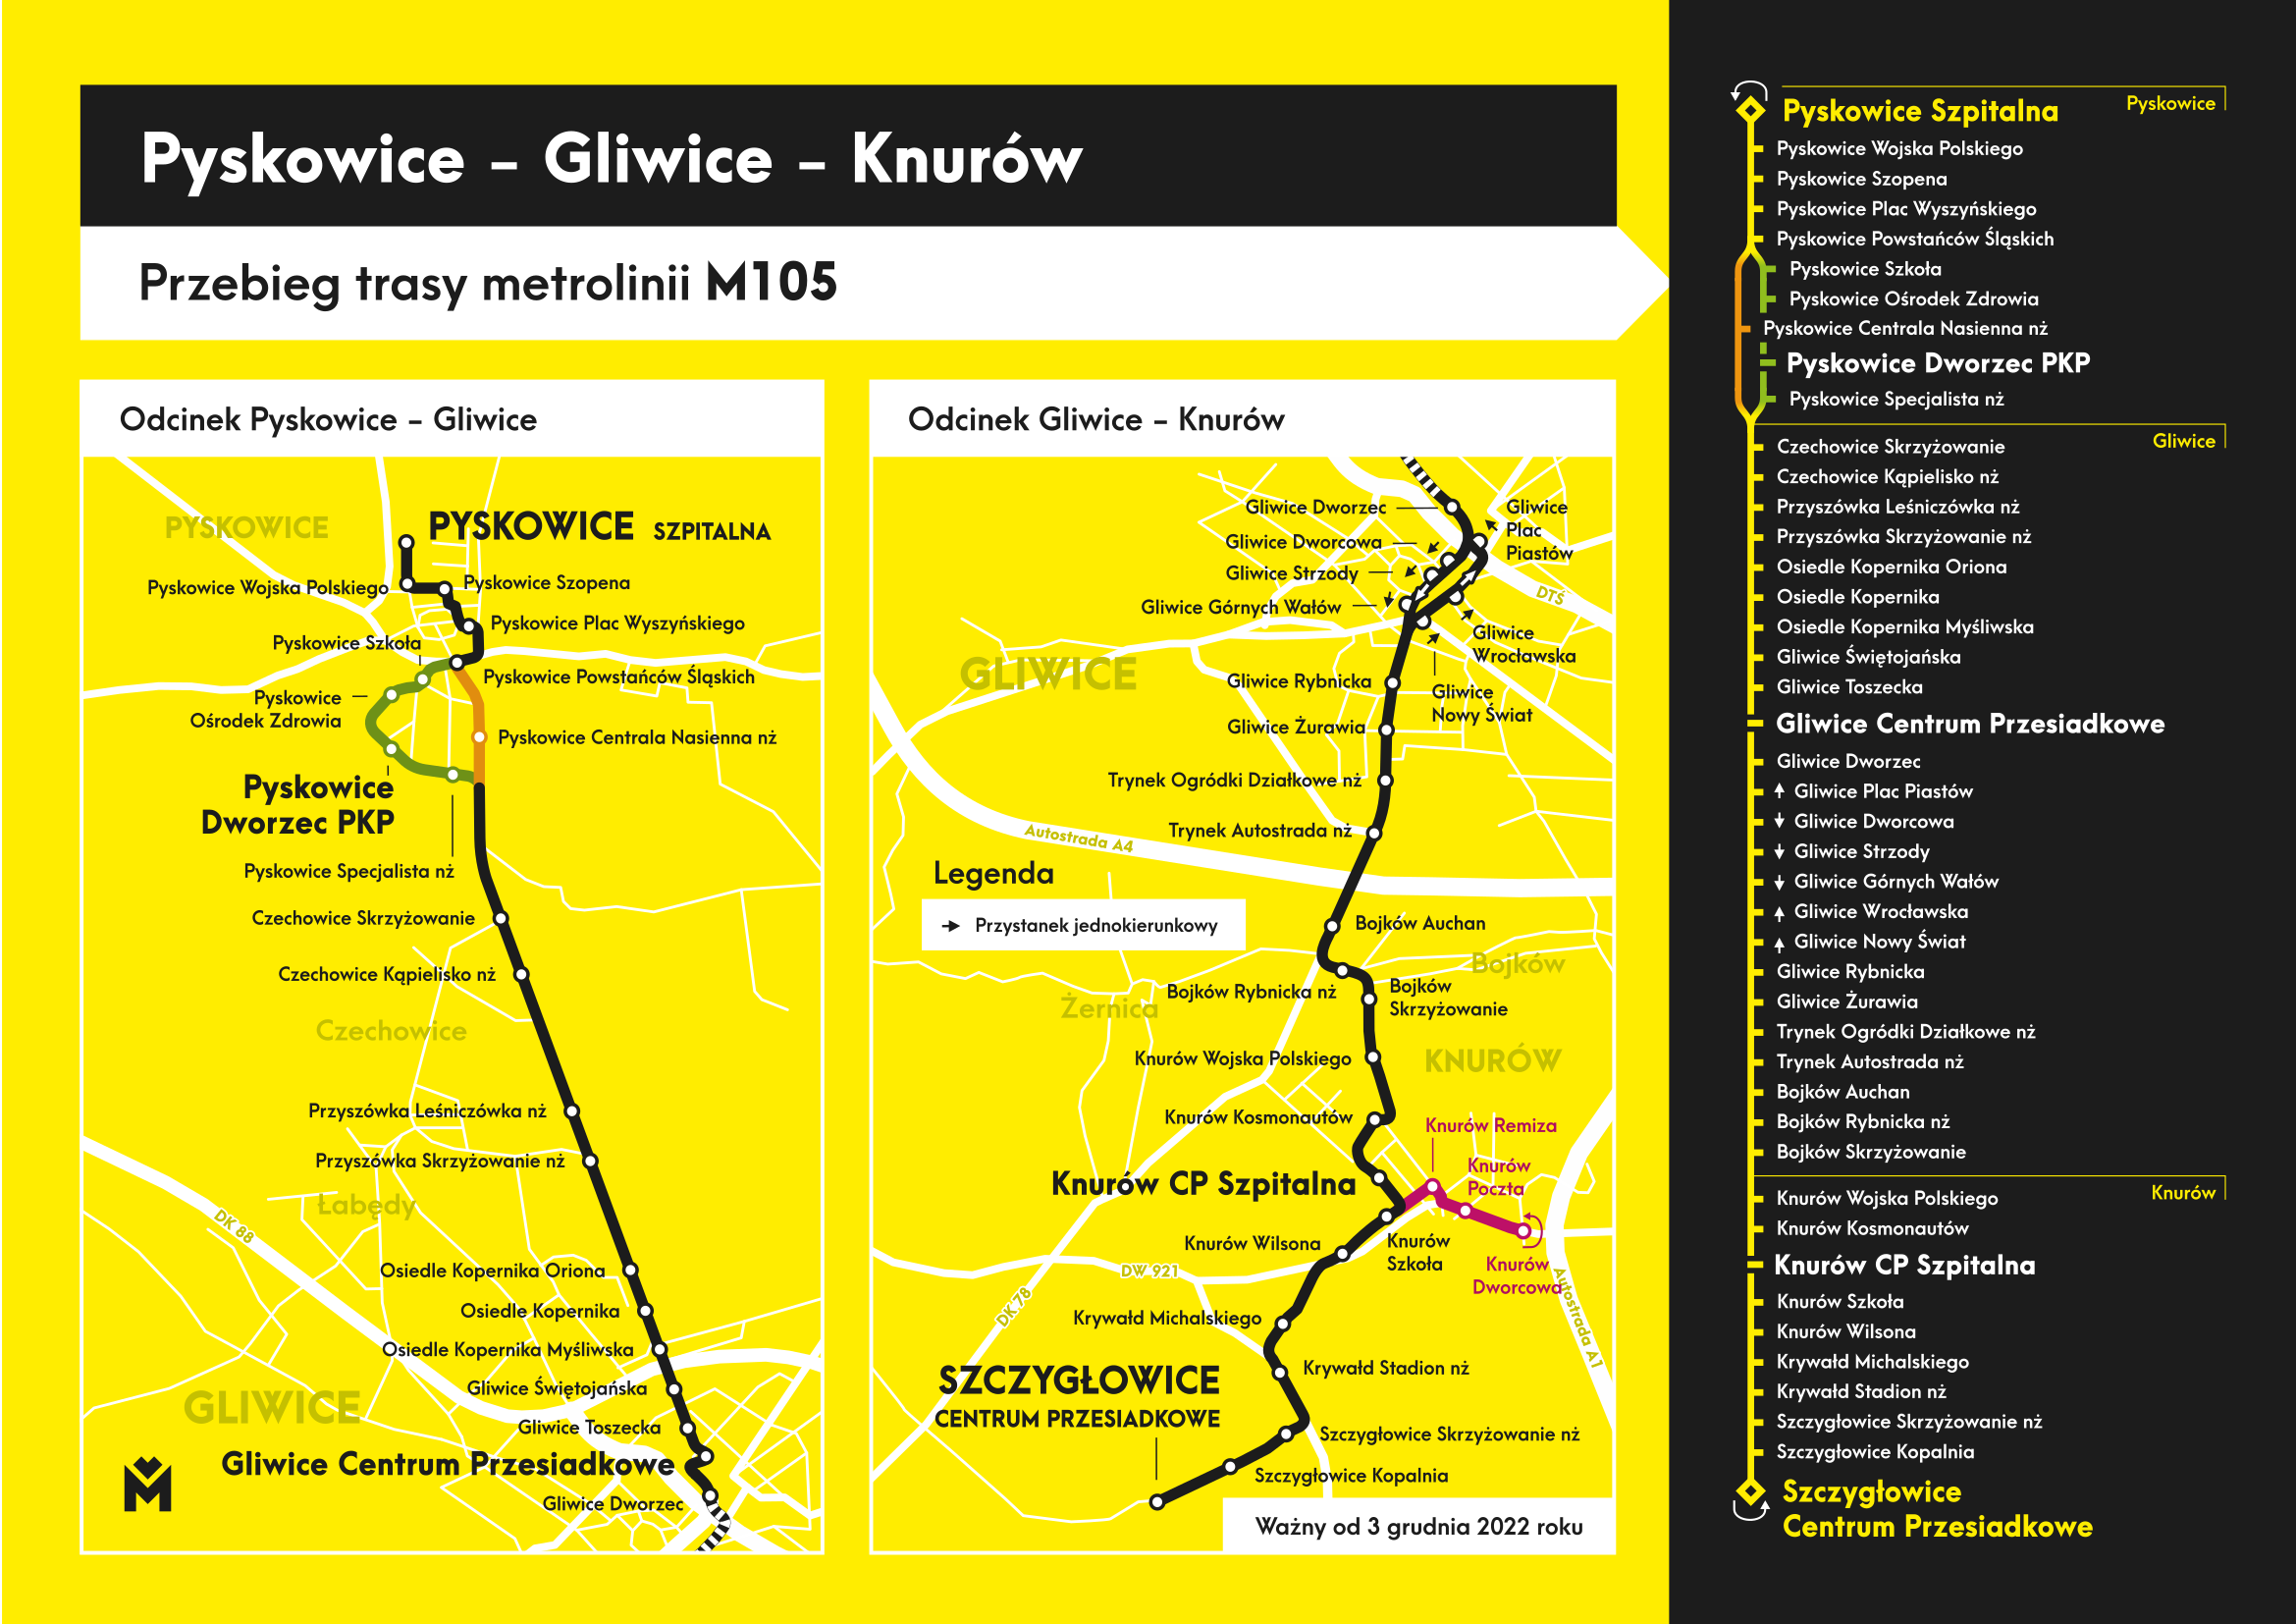 Trasa linii M105 od 3 grudnia 2022 roku